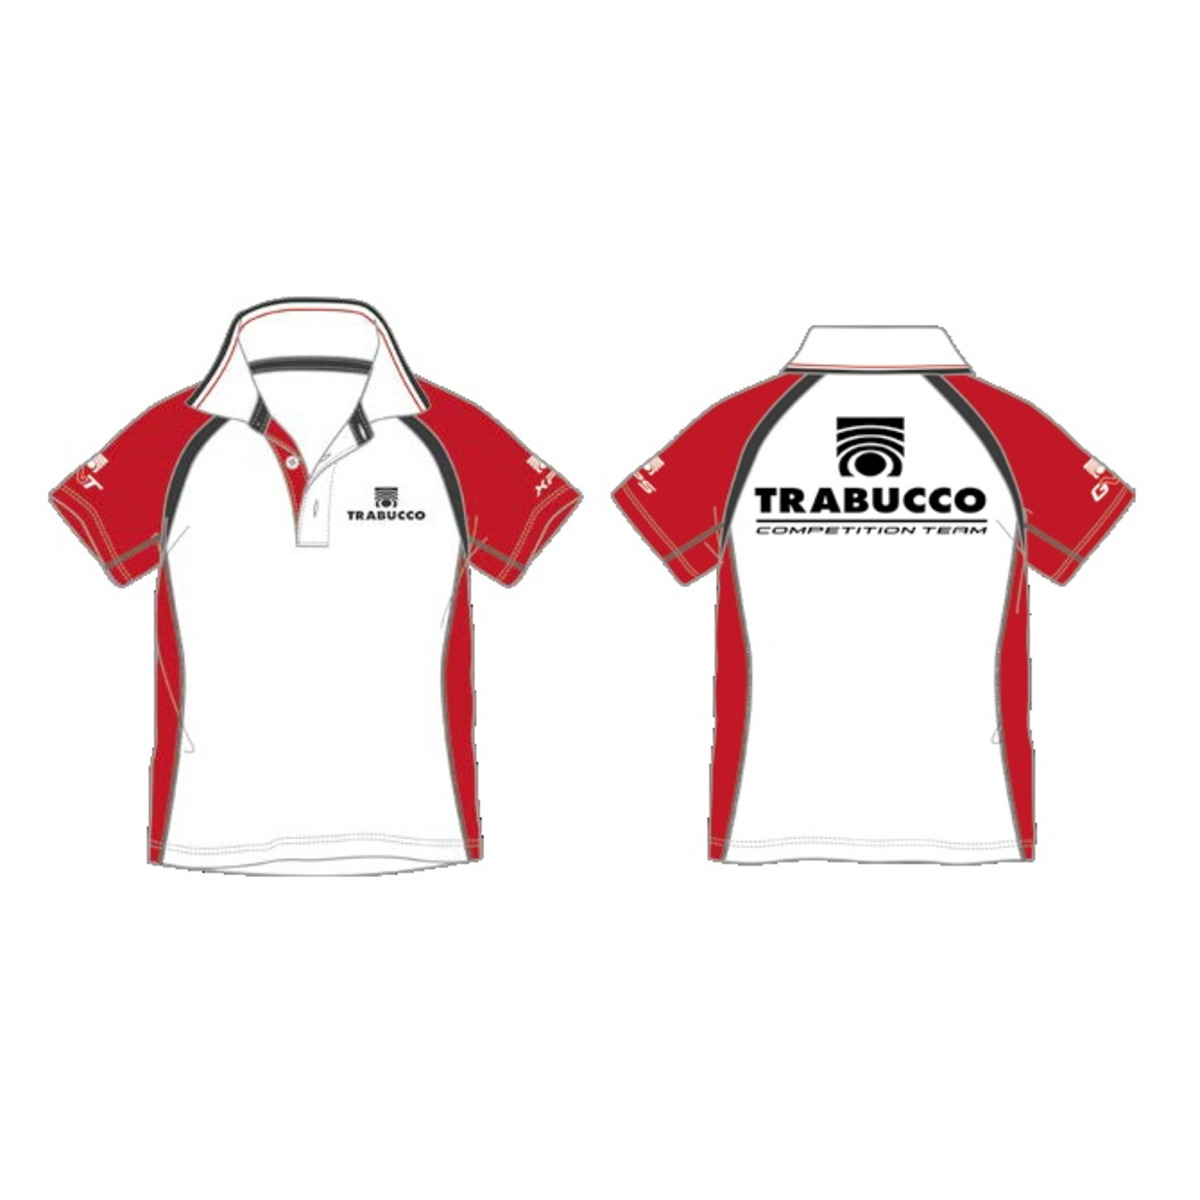 Trabucco Gtn Teck Polo Shirt - XL